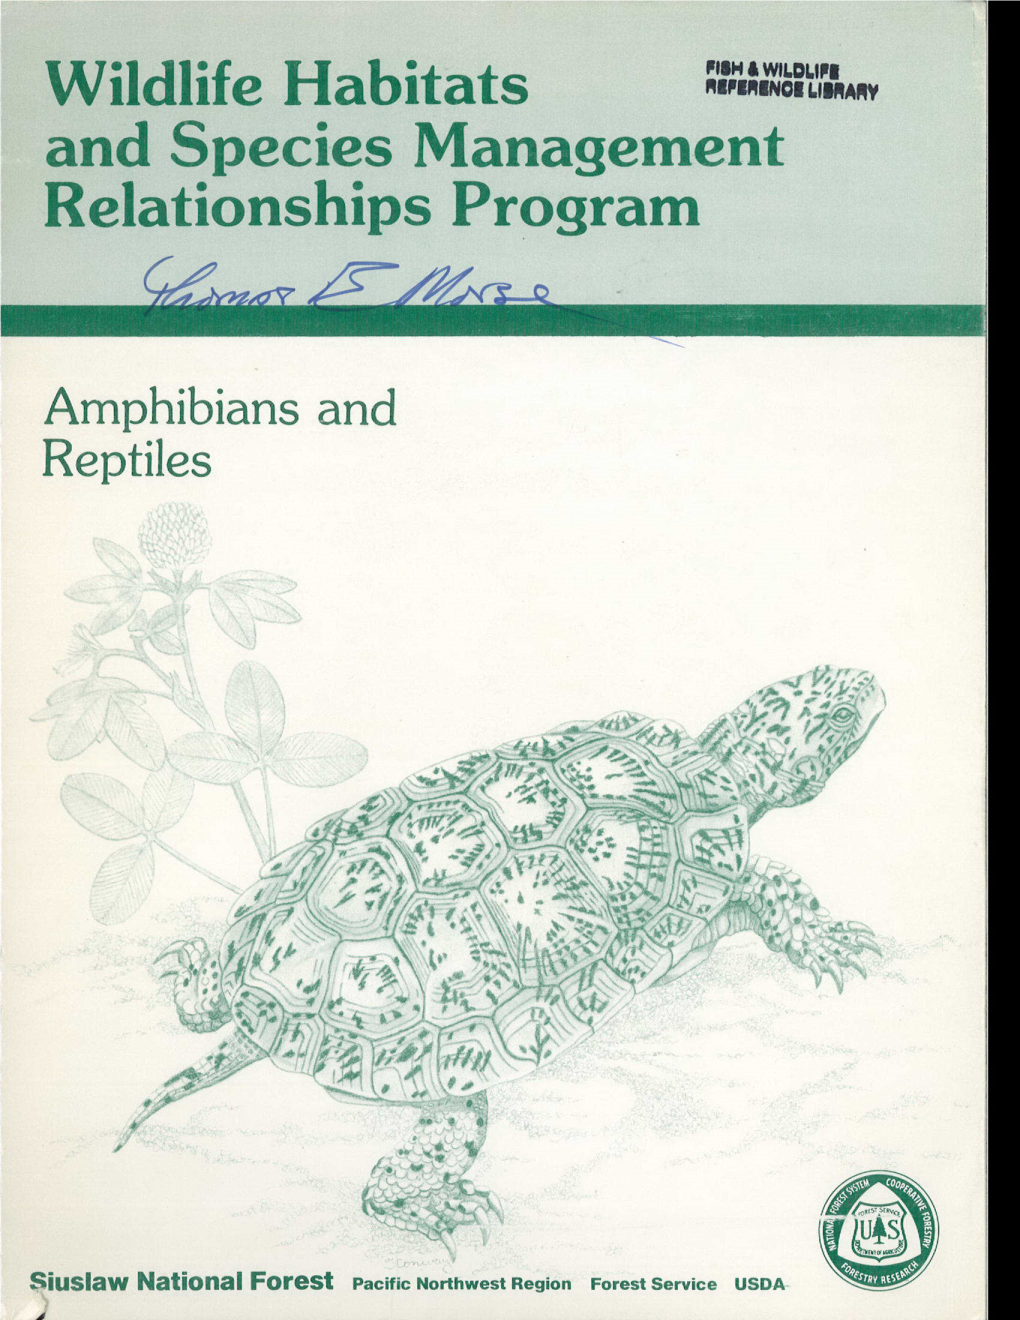 11,47 Ildliffe Habitats and Species Management Relationships